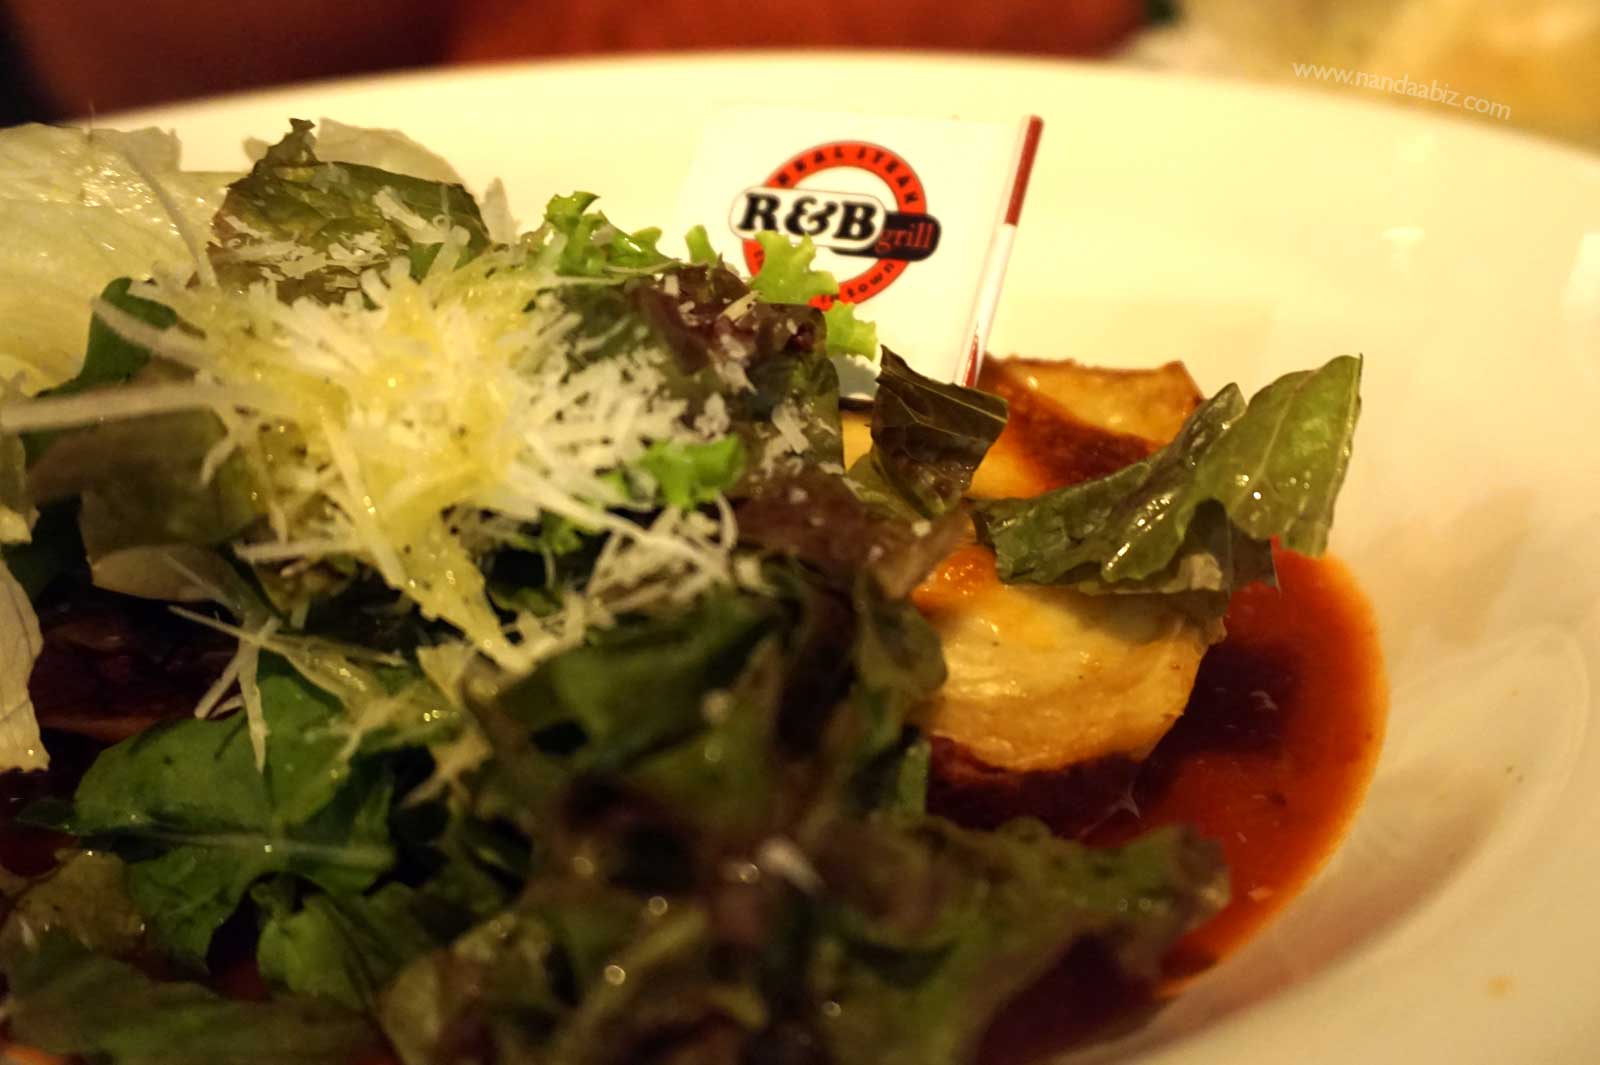 rnb-steak-and-grill-lasagna